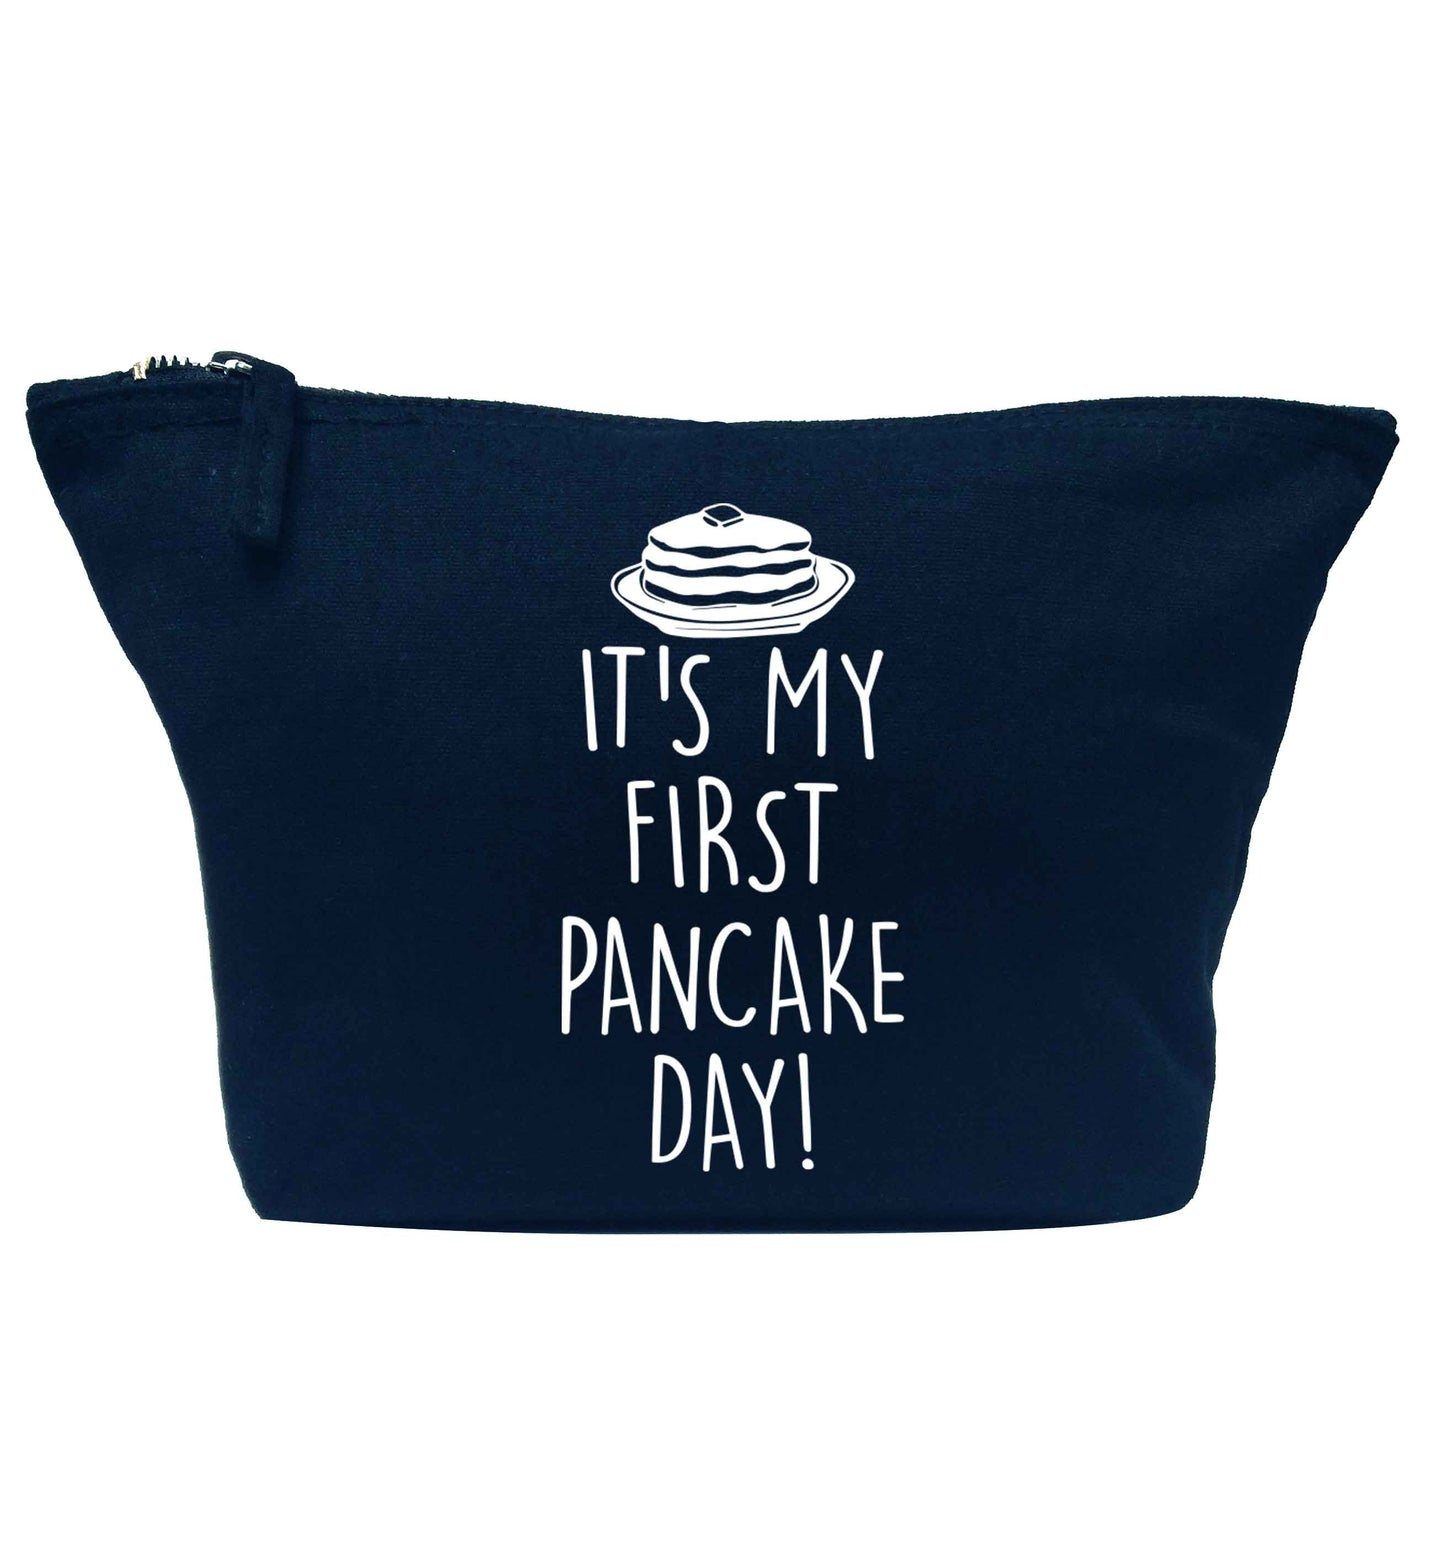 It's my first pancake day navy makeup bag